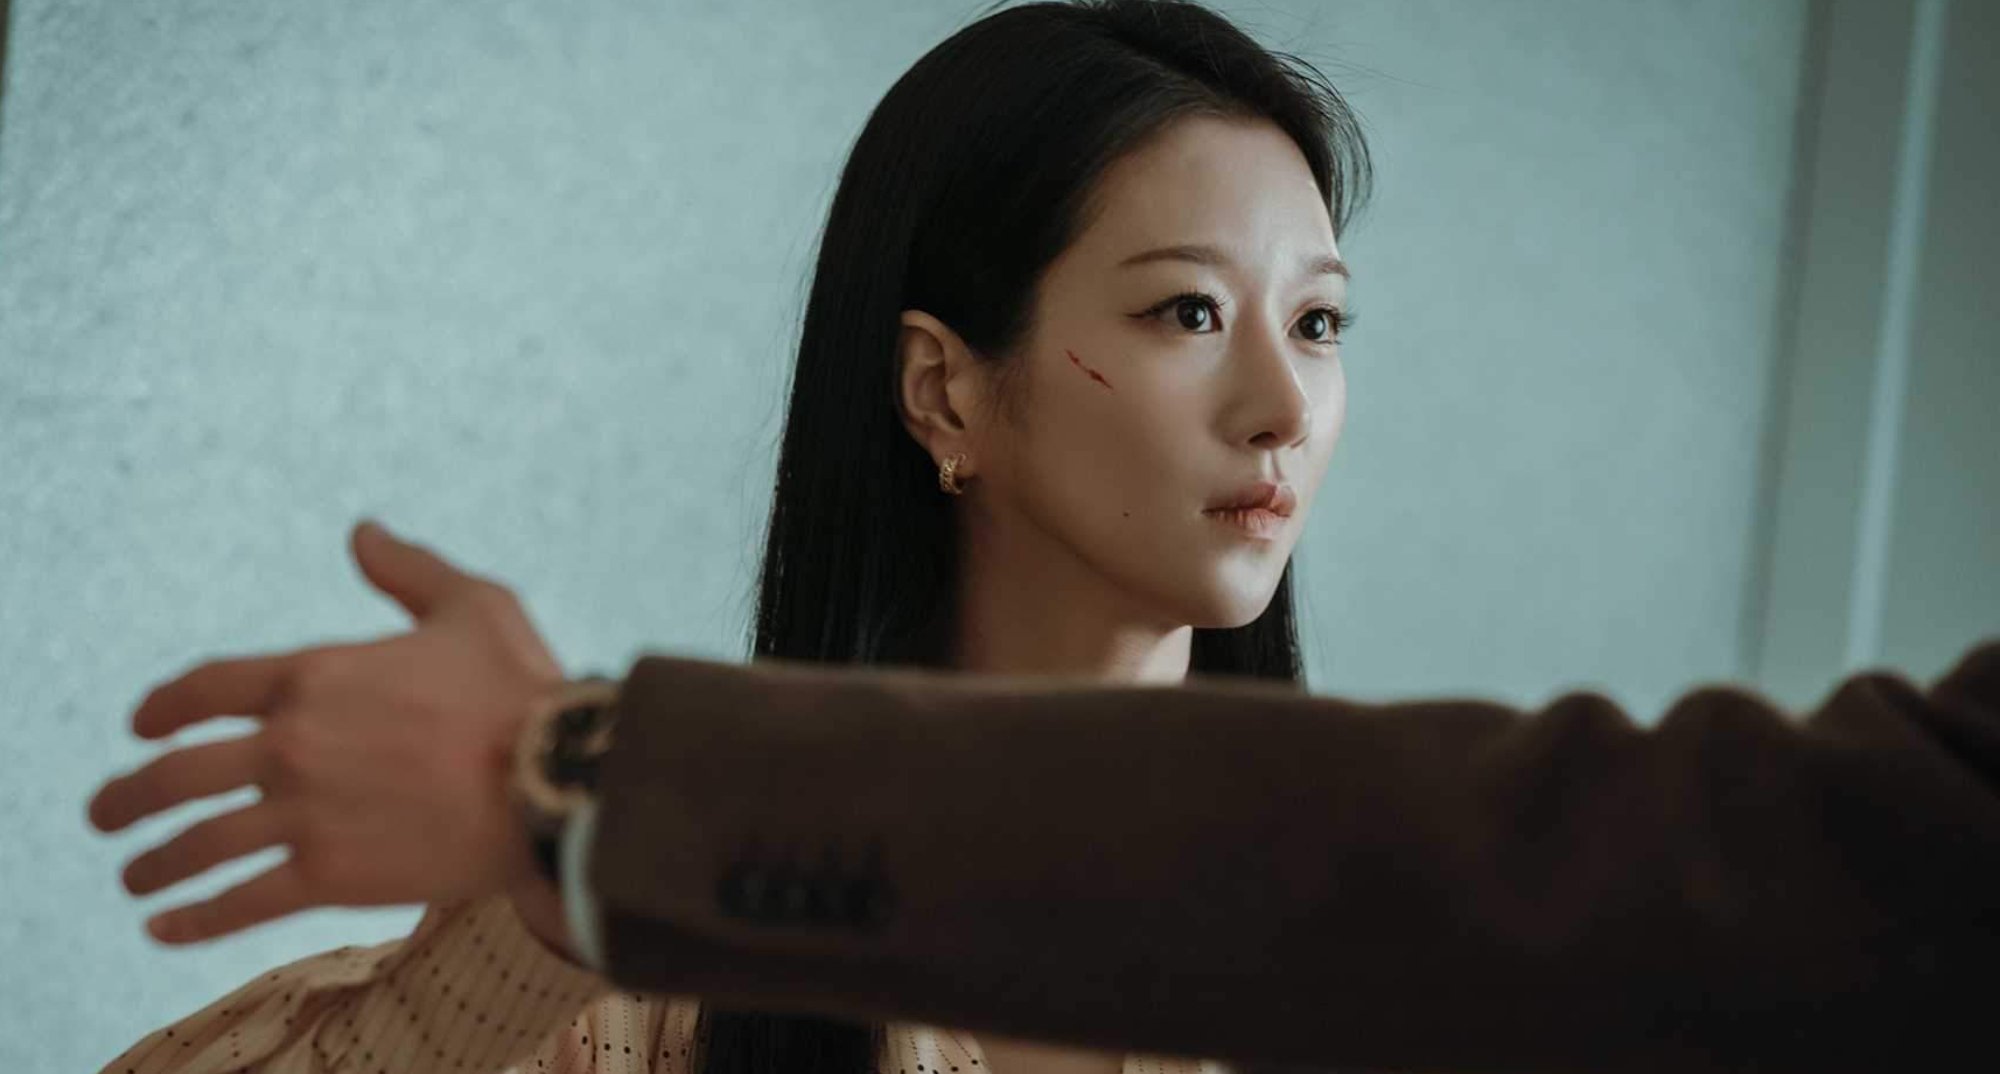 Seo Yea-ji as Ra-el in 'Eve' K-drama and similarities to 'Revenge' series